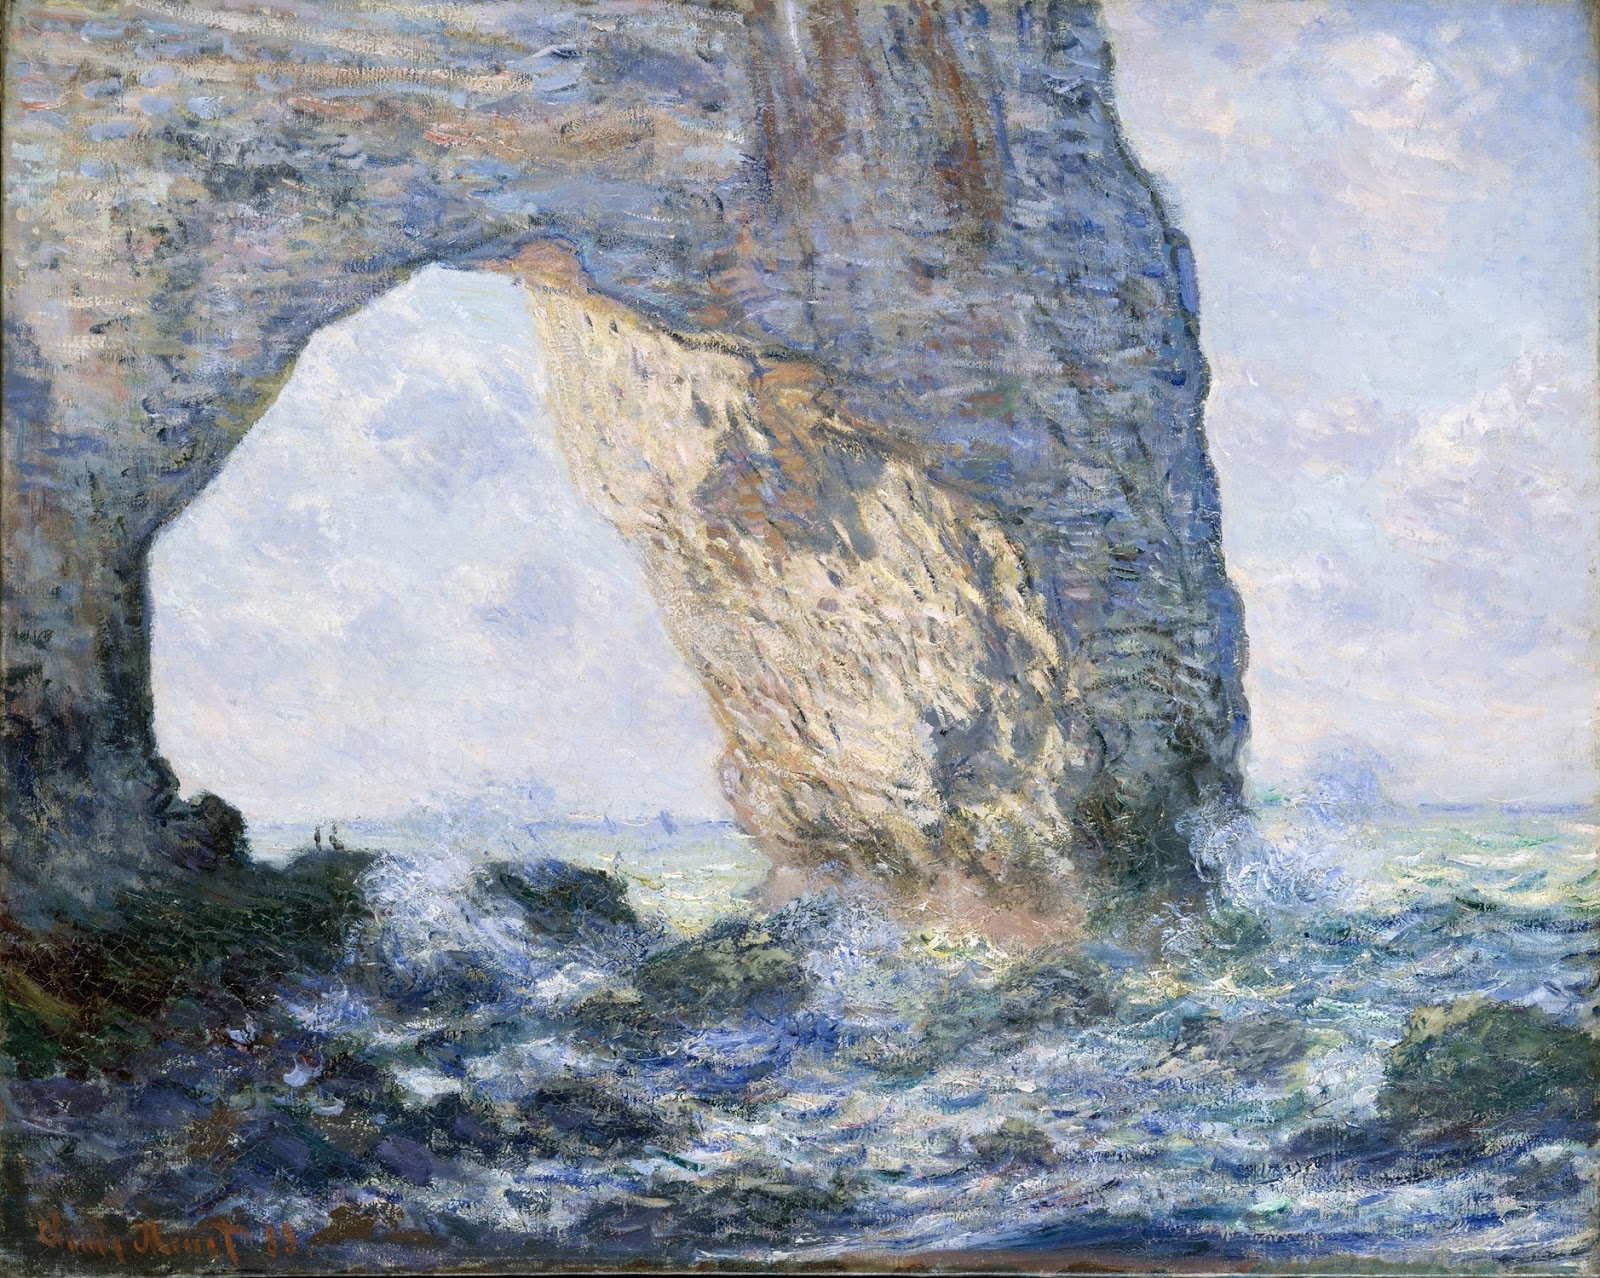 Claude+Monet-1840-1926 (779).jpg